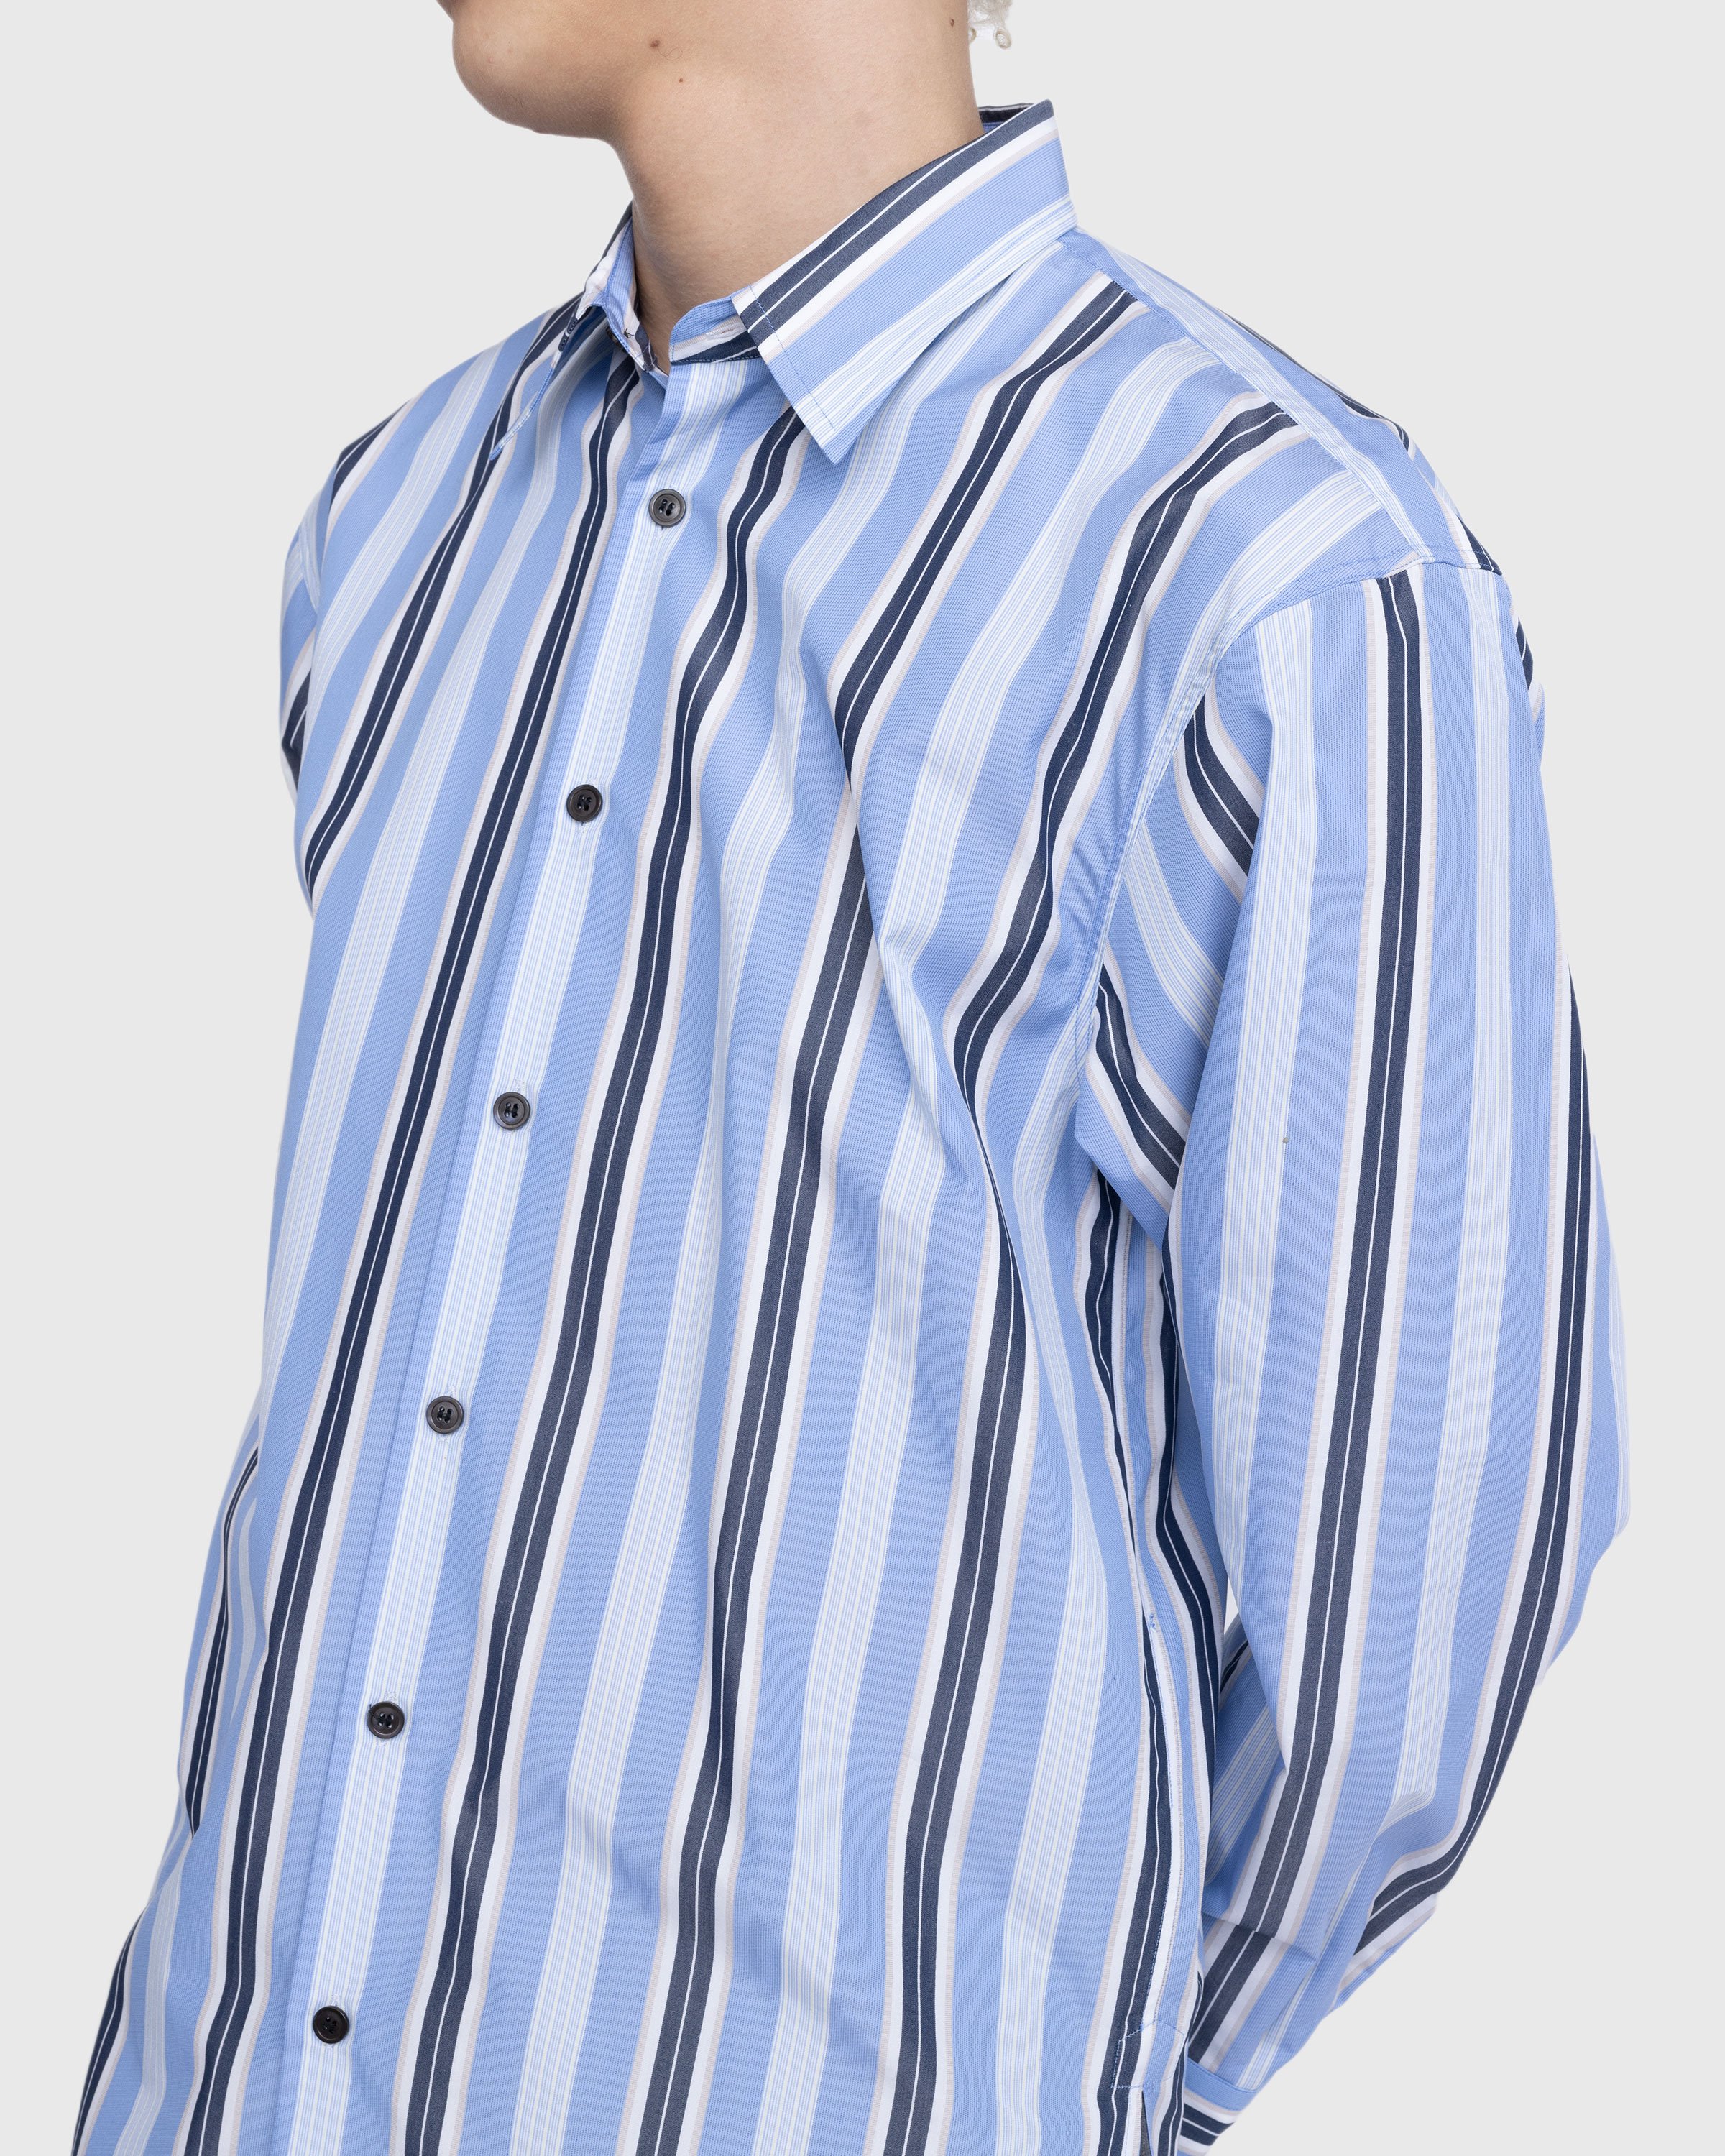 Dries van Noten - Croom Shirt Light Blue - Clothing - Blue - Image 5